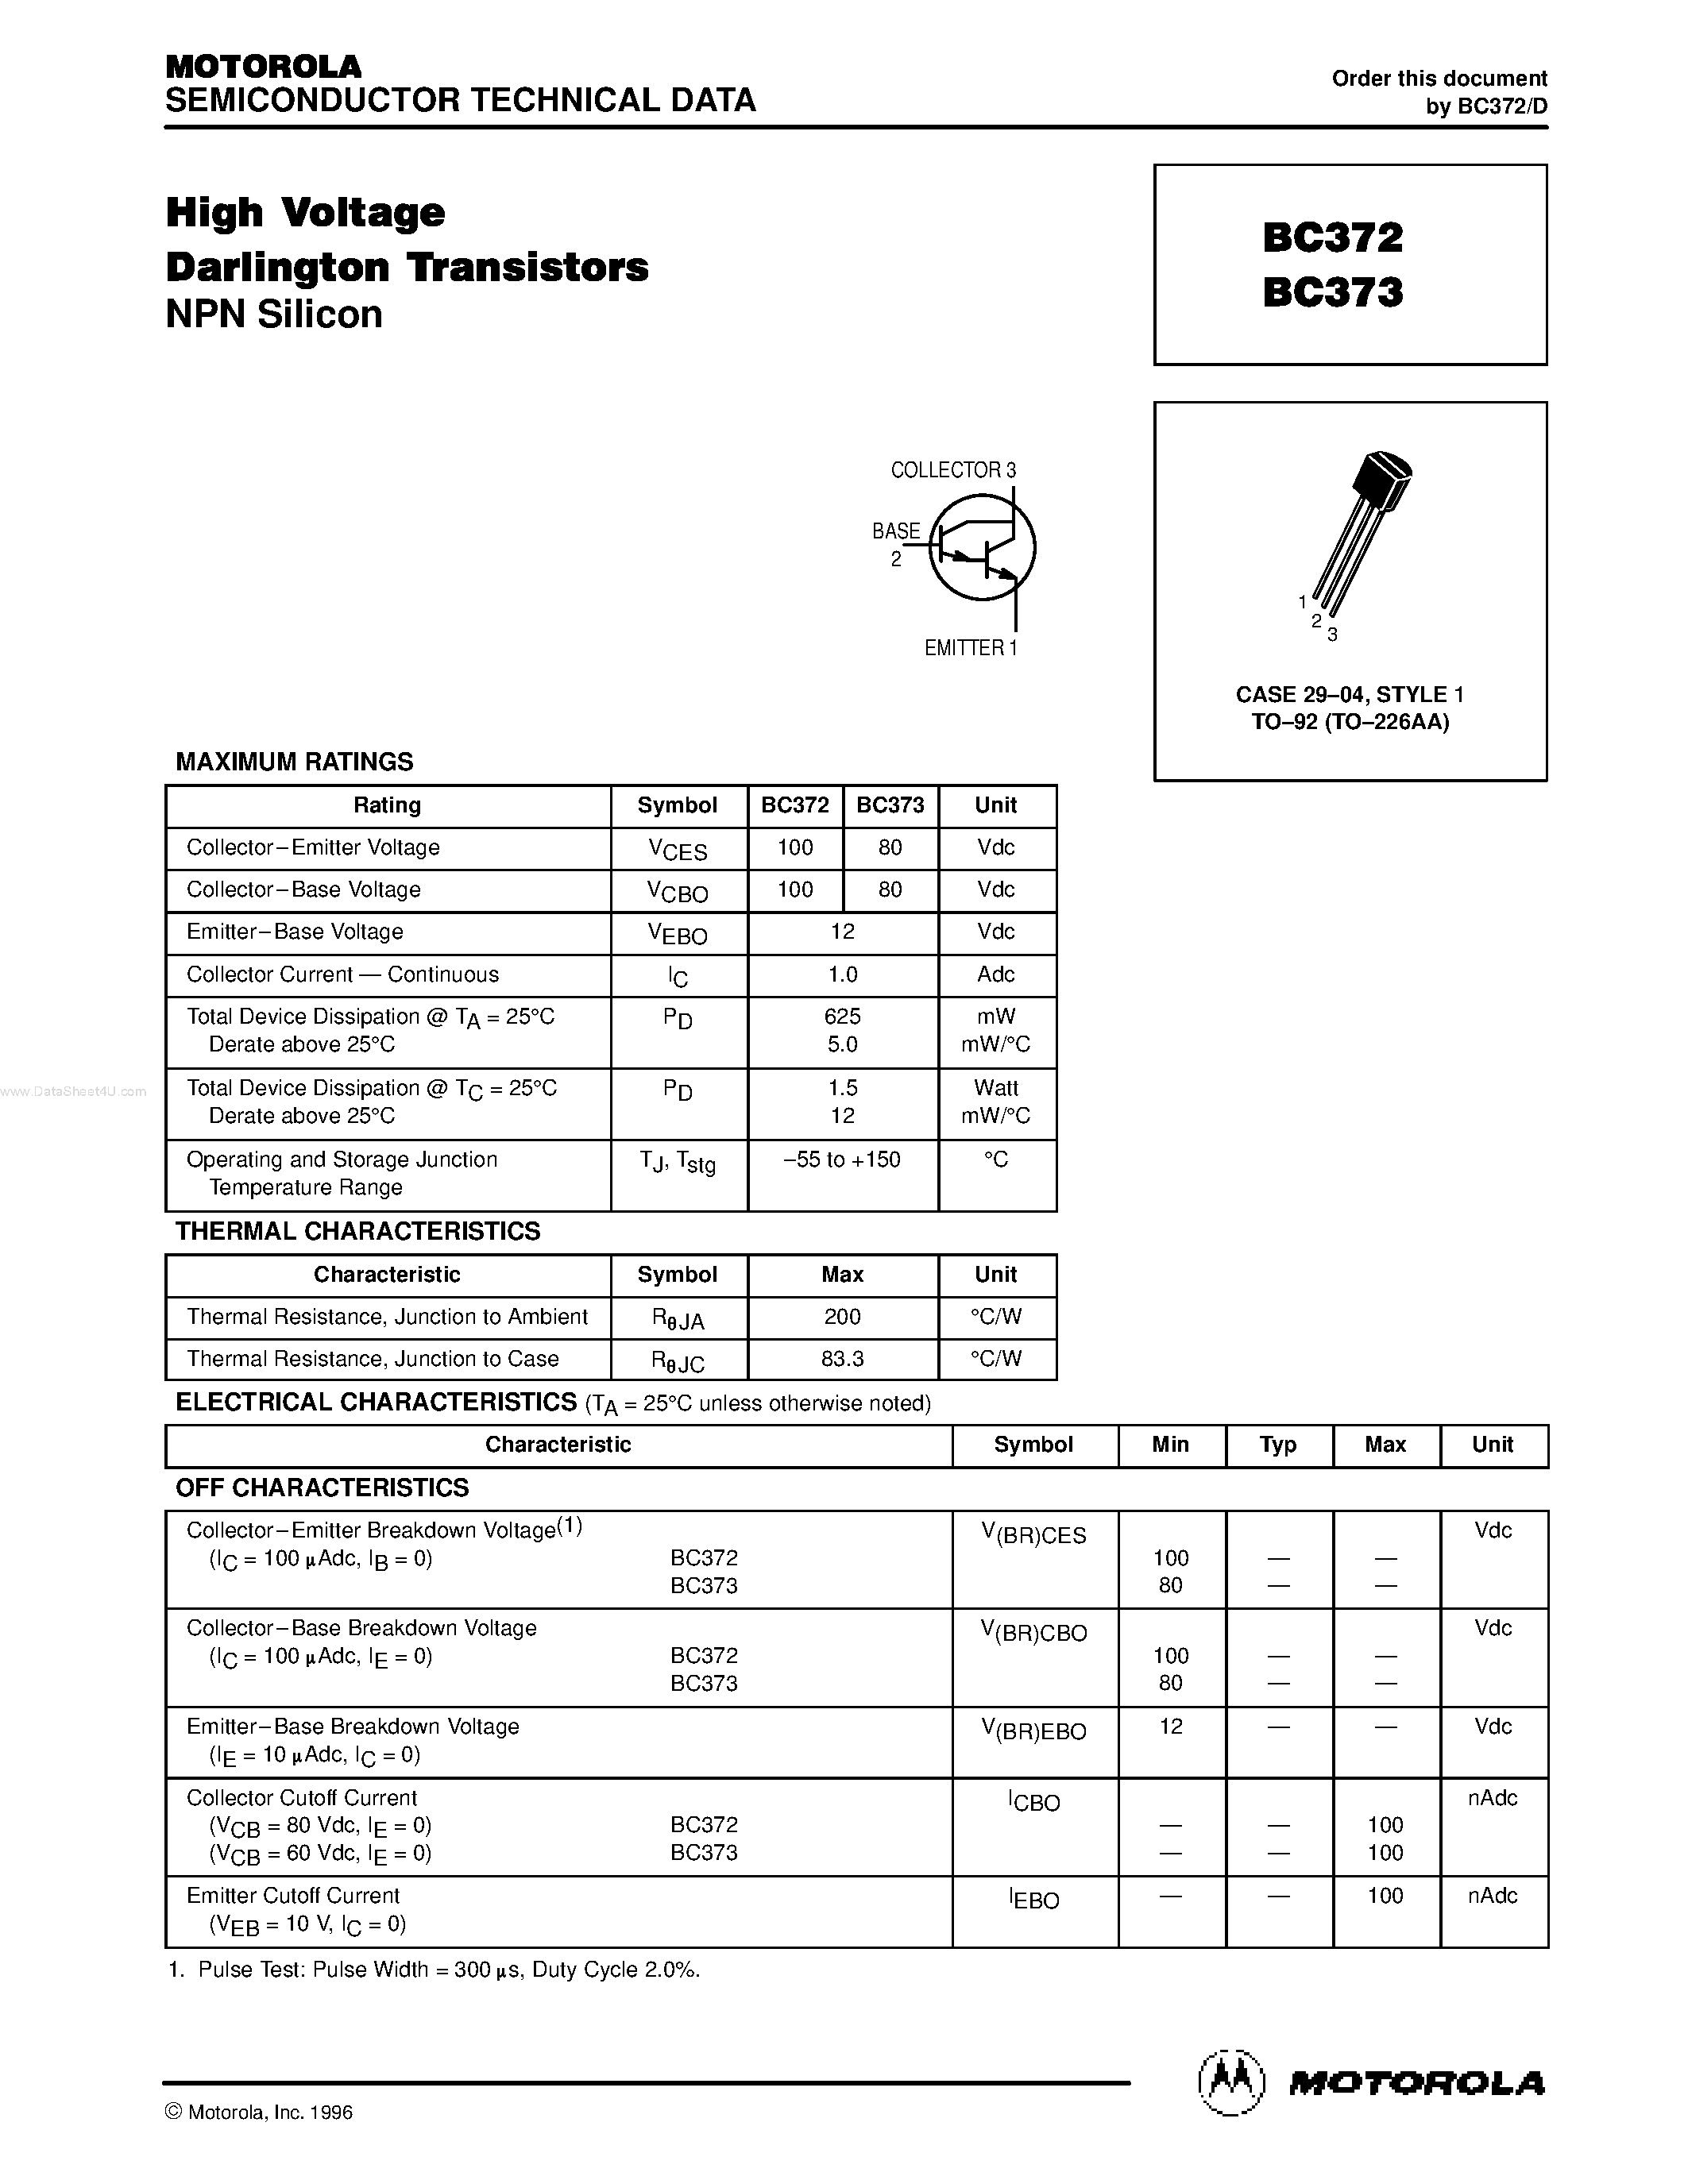 Datasheet BC372 - High Voltage Darlington Transistors page 1